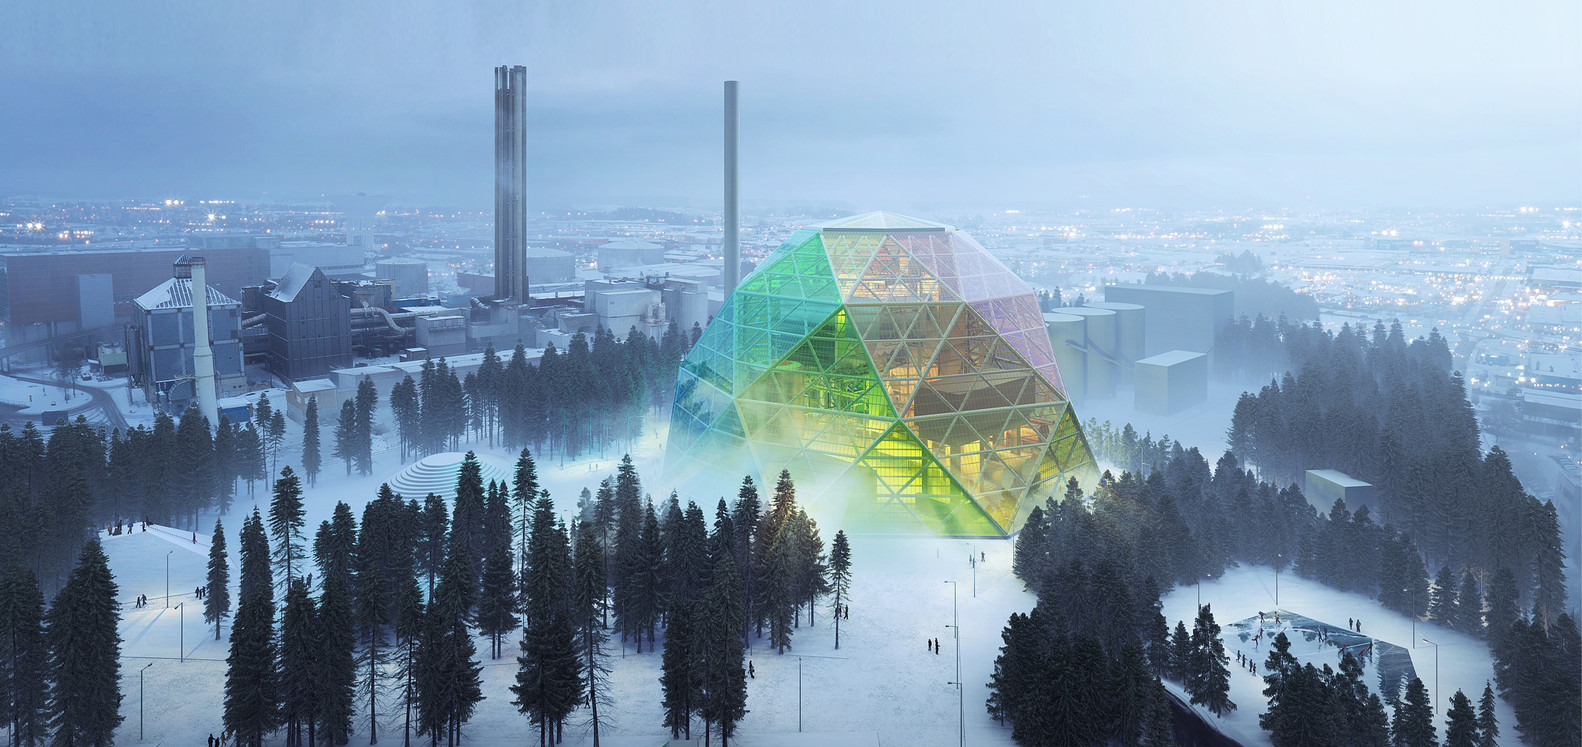 BIGs “Unconventional” Uppsala Power Plant Designed to Host Summer Festivals-18